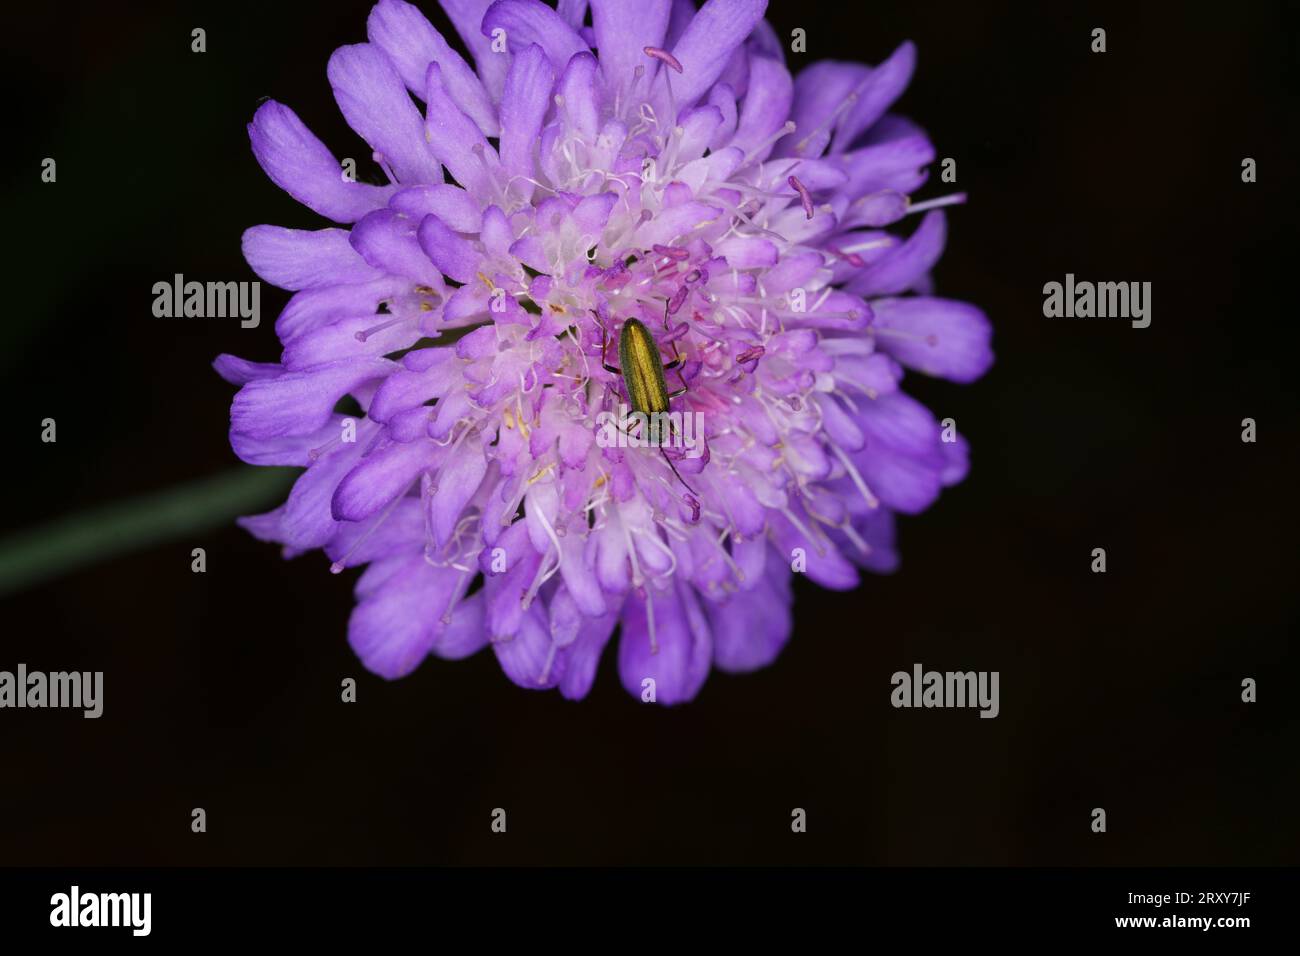 Chrysanthia geniculata famille Oedemeridae genre Chrysanthia insecte de la nature sauvage Photographie, image, papier peint Banque D'Images